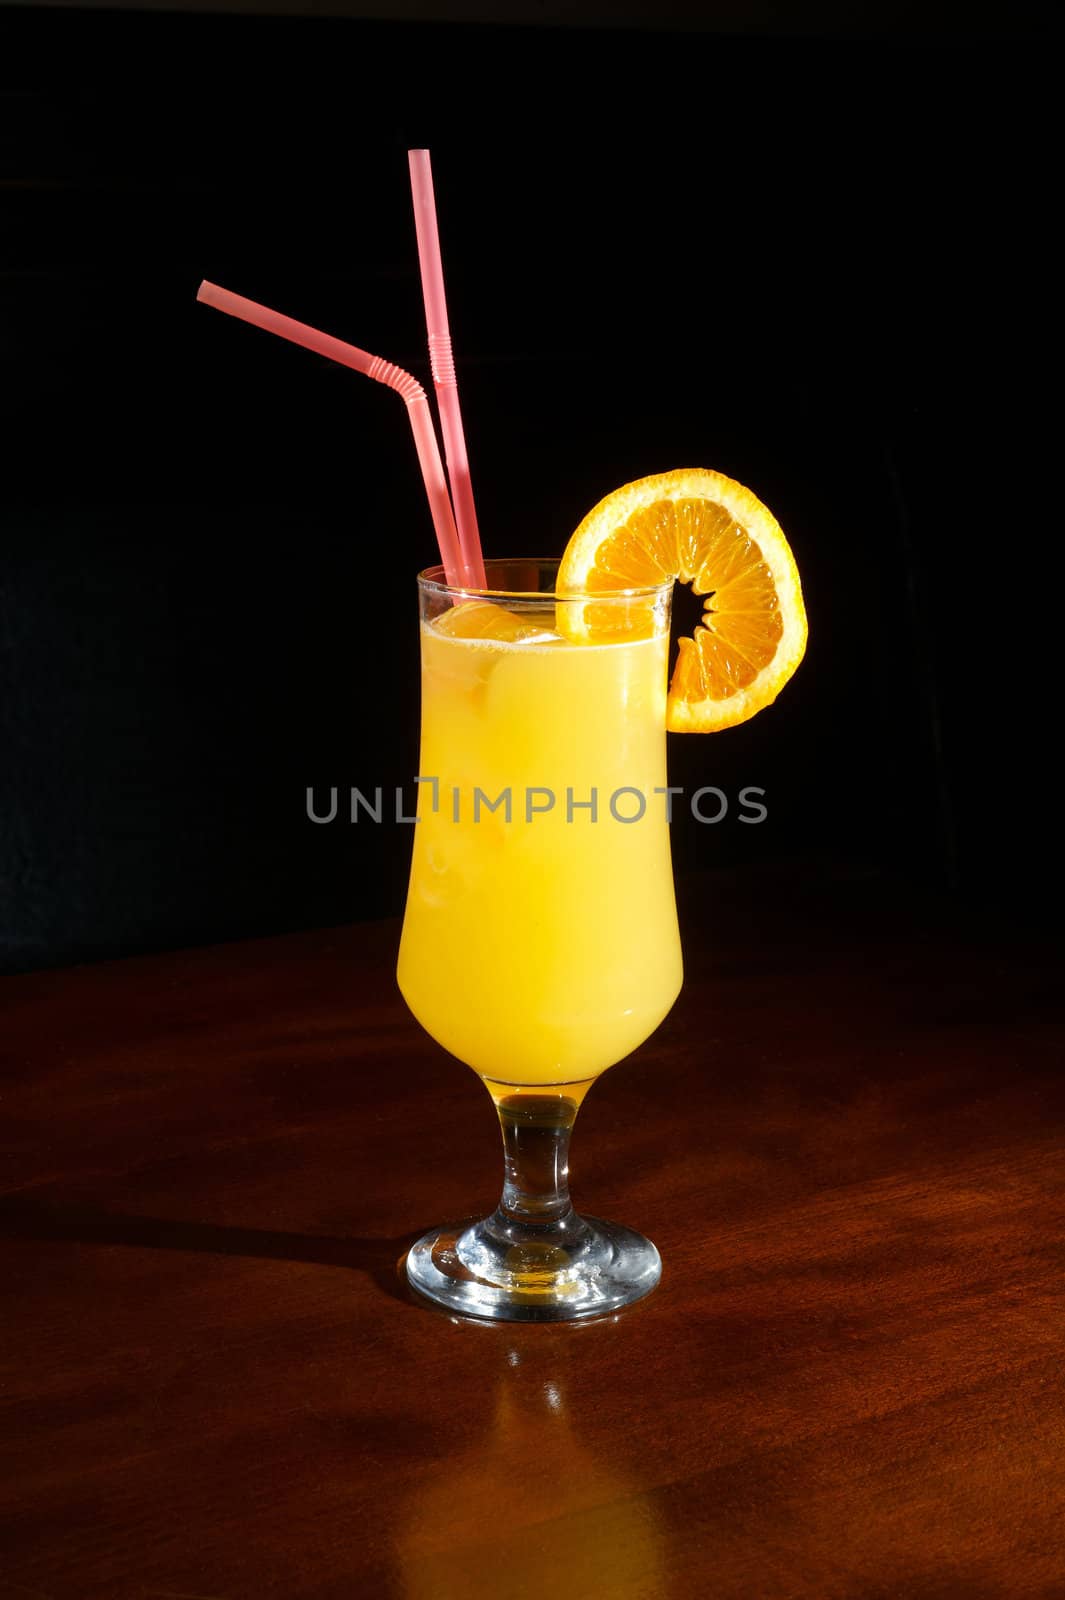 orange juice on a cocktail glass with a slice of orange